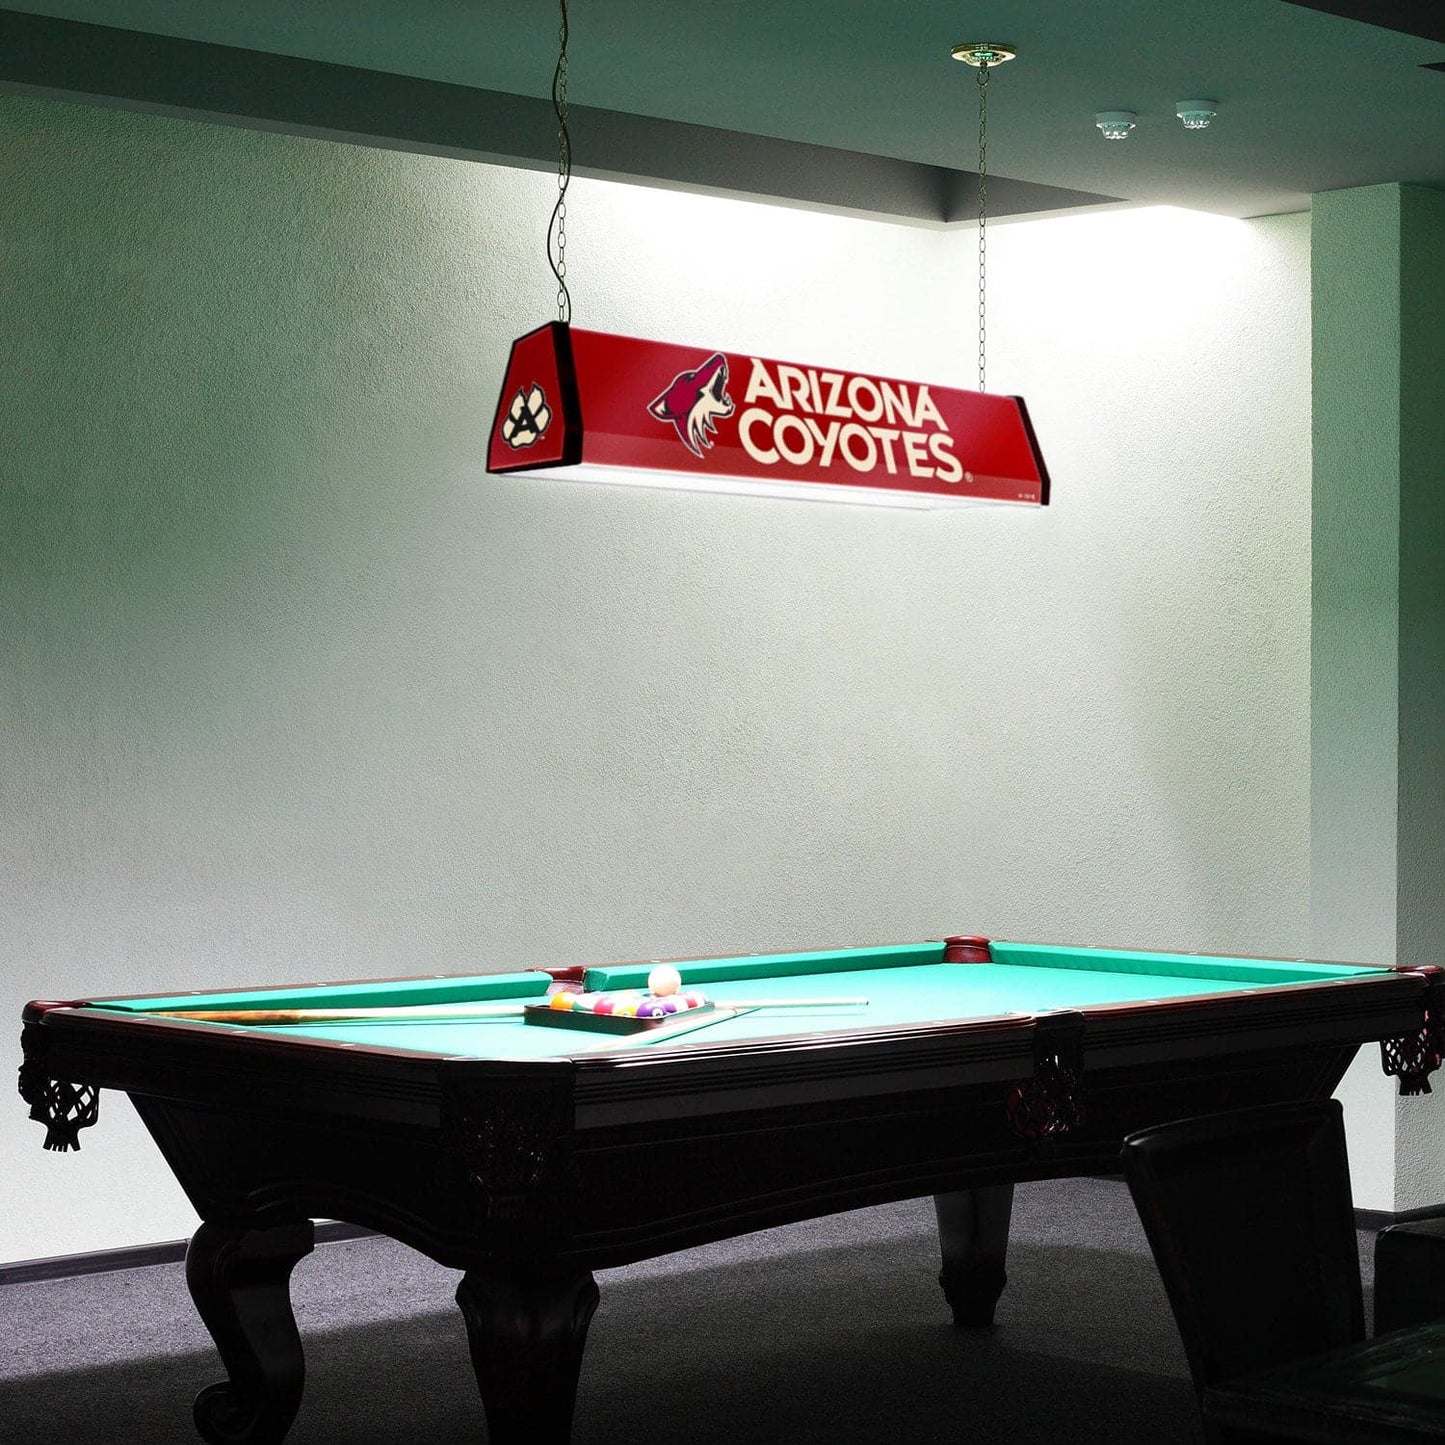 Arizona Coyotes: Standard Pool Table Light - The Fan-Brand